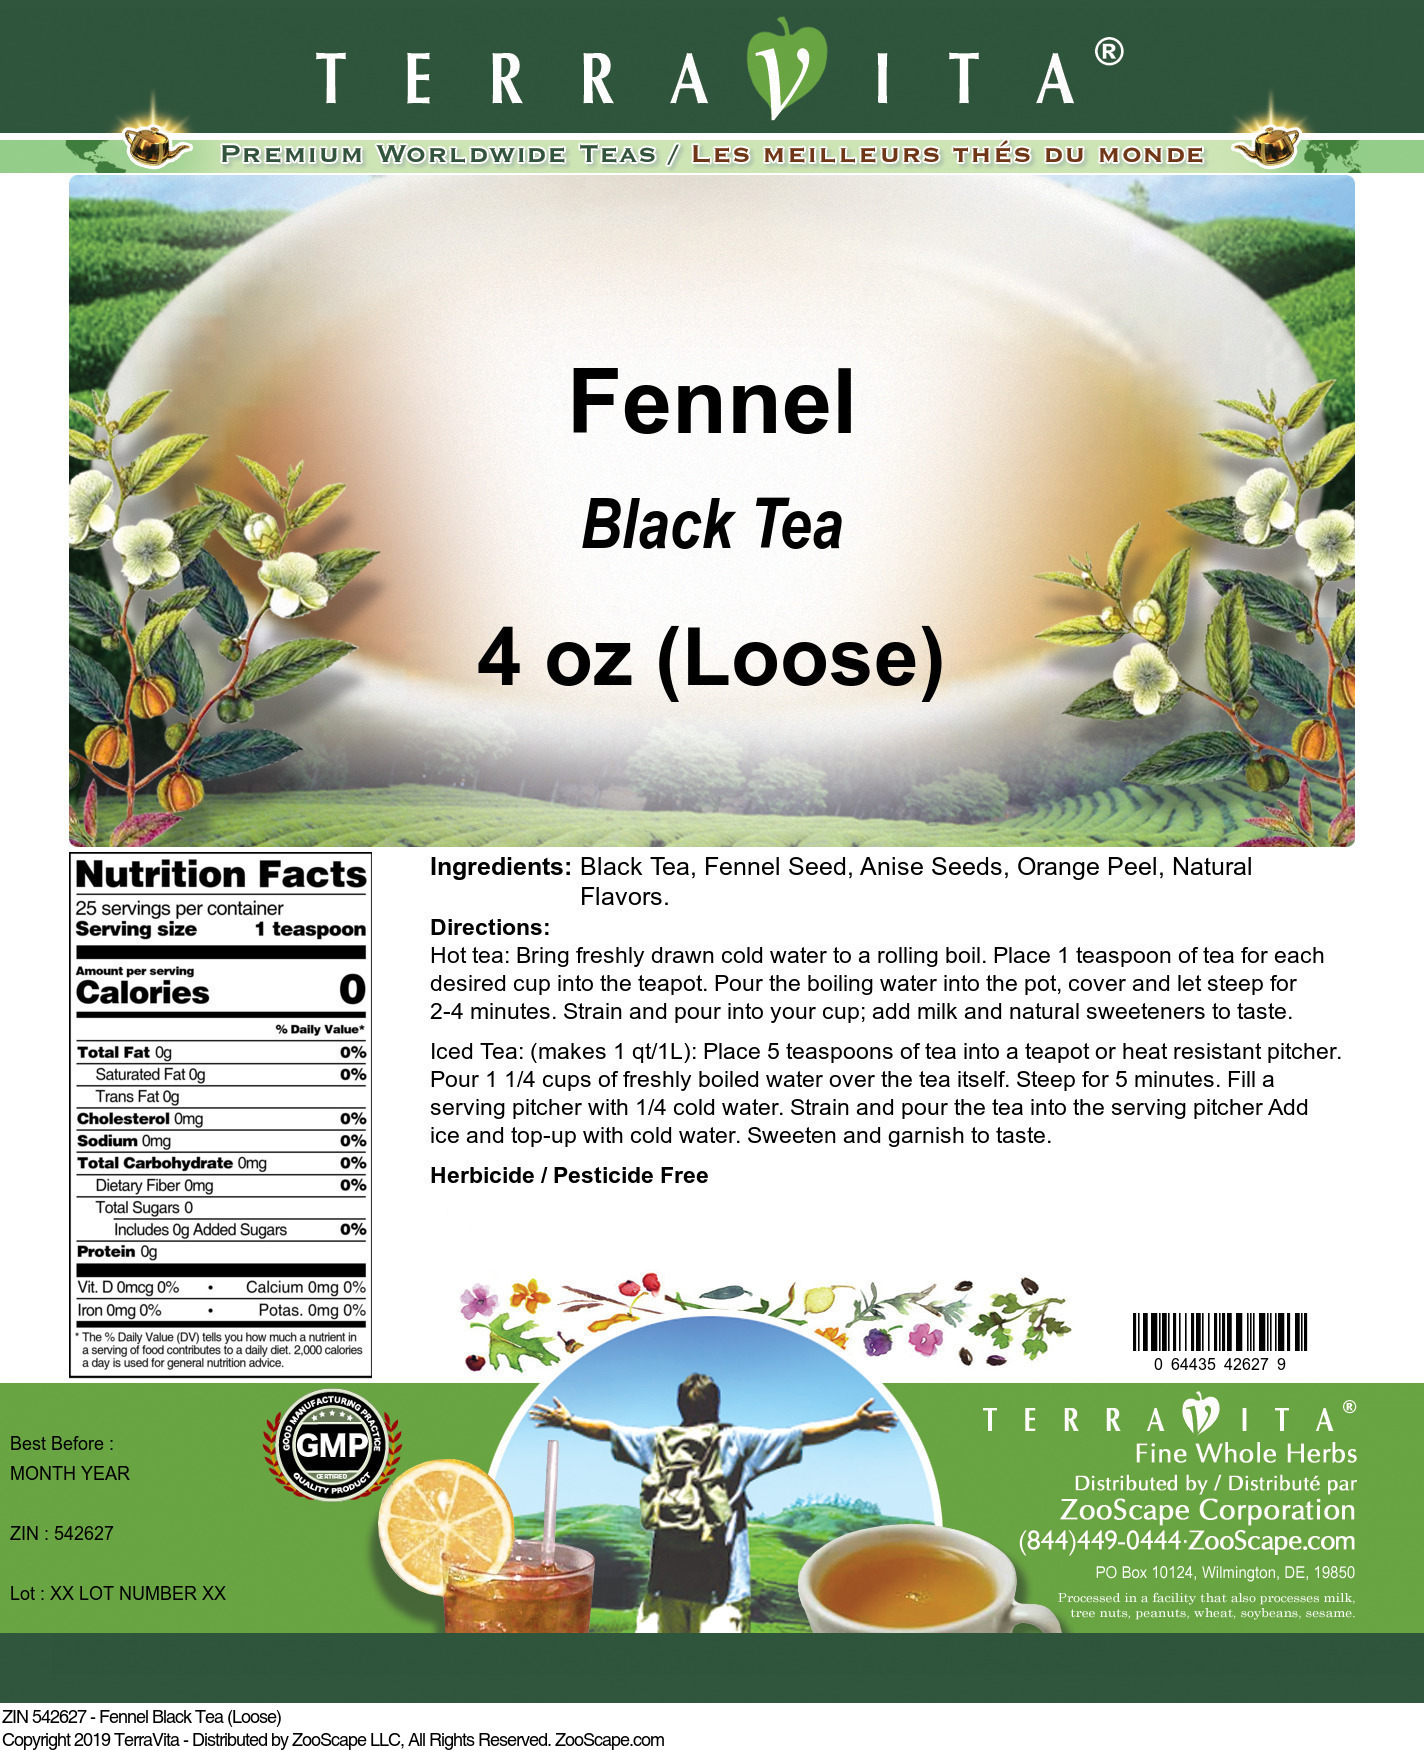 Fennel Black Tea (Loose) - Label